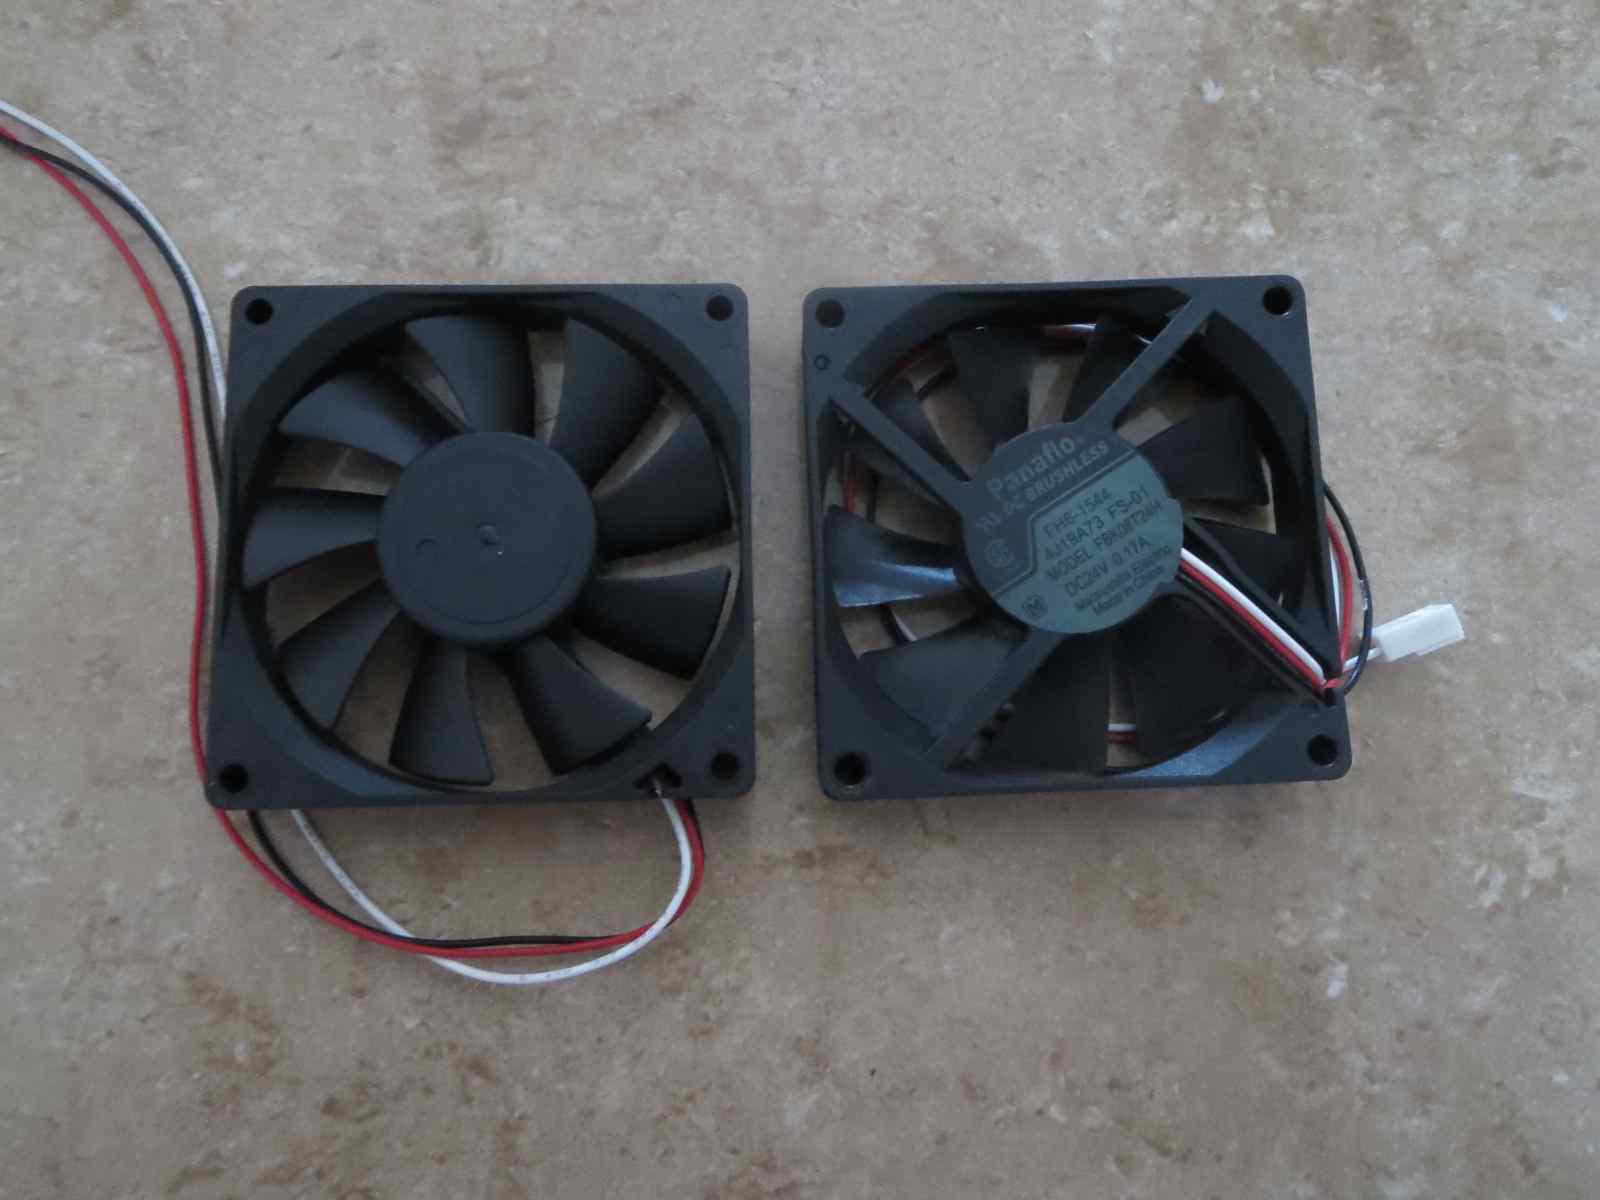  4J19A73 panasonic cooling fan